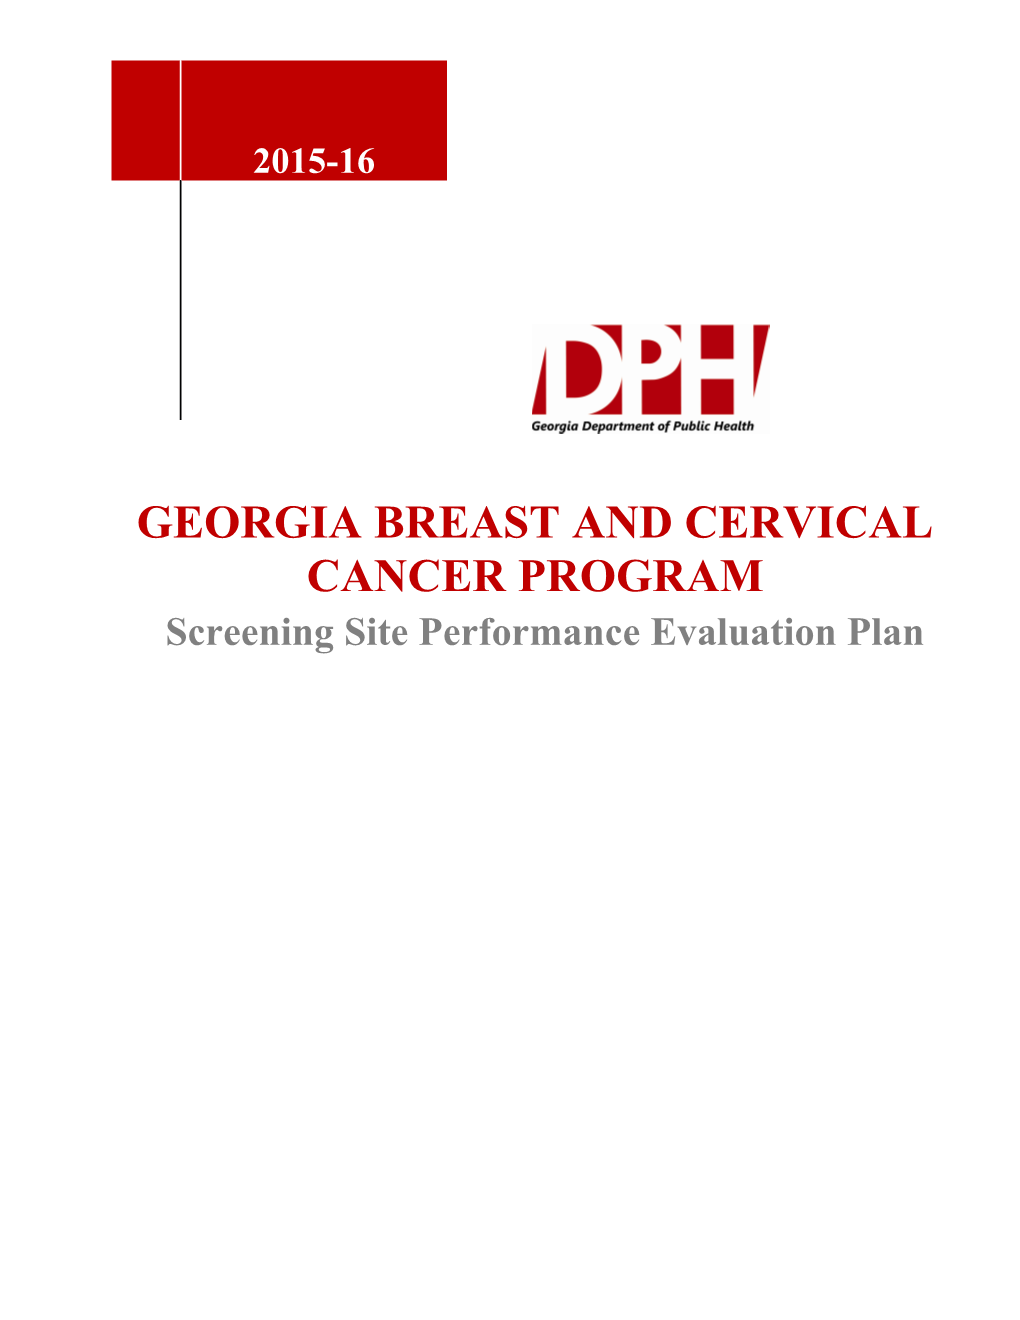 Georgia Breast and Cervical Cancer Program